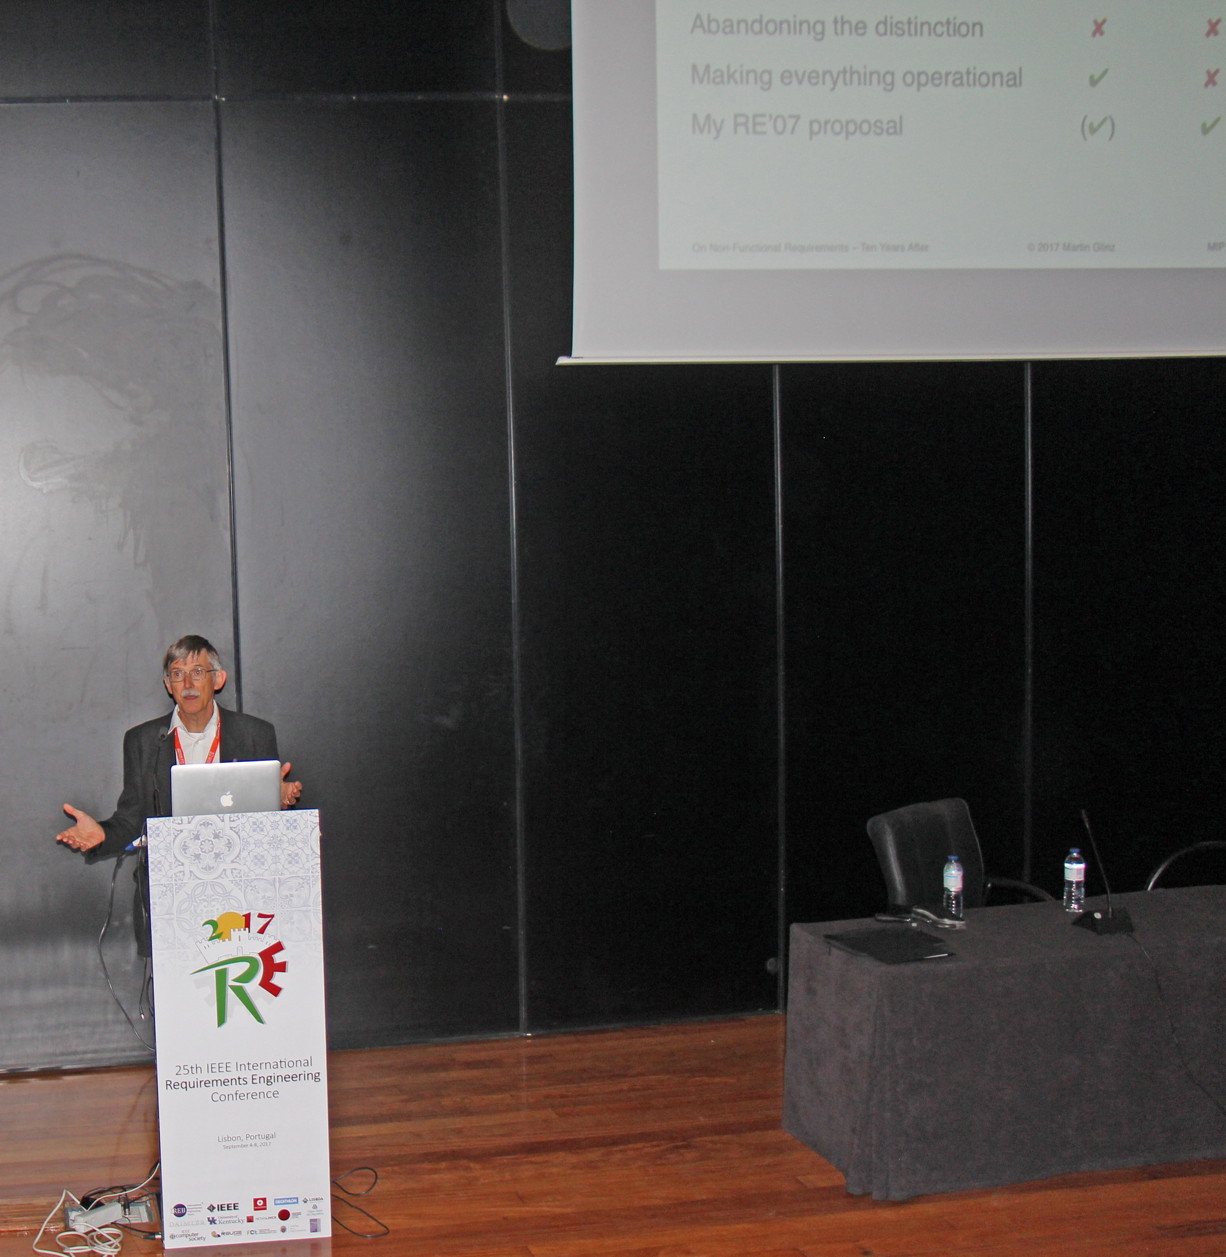 MIP Award Talk at RE'17 in Lisbon